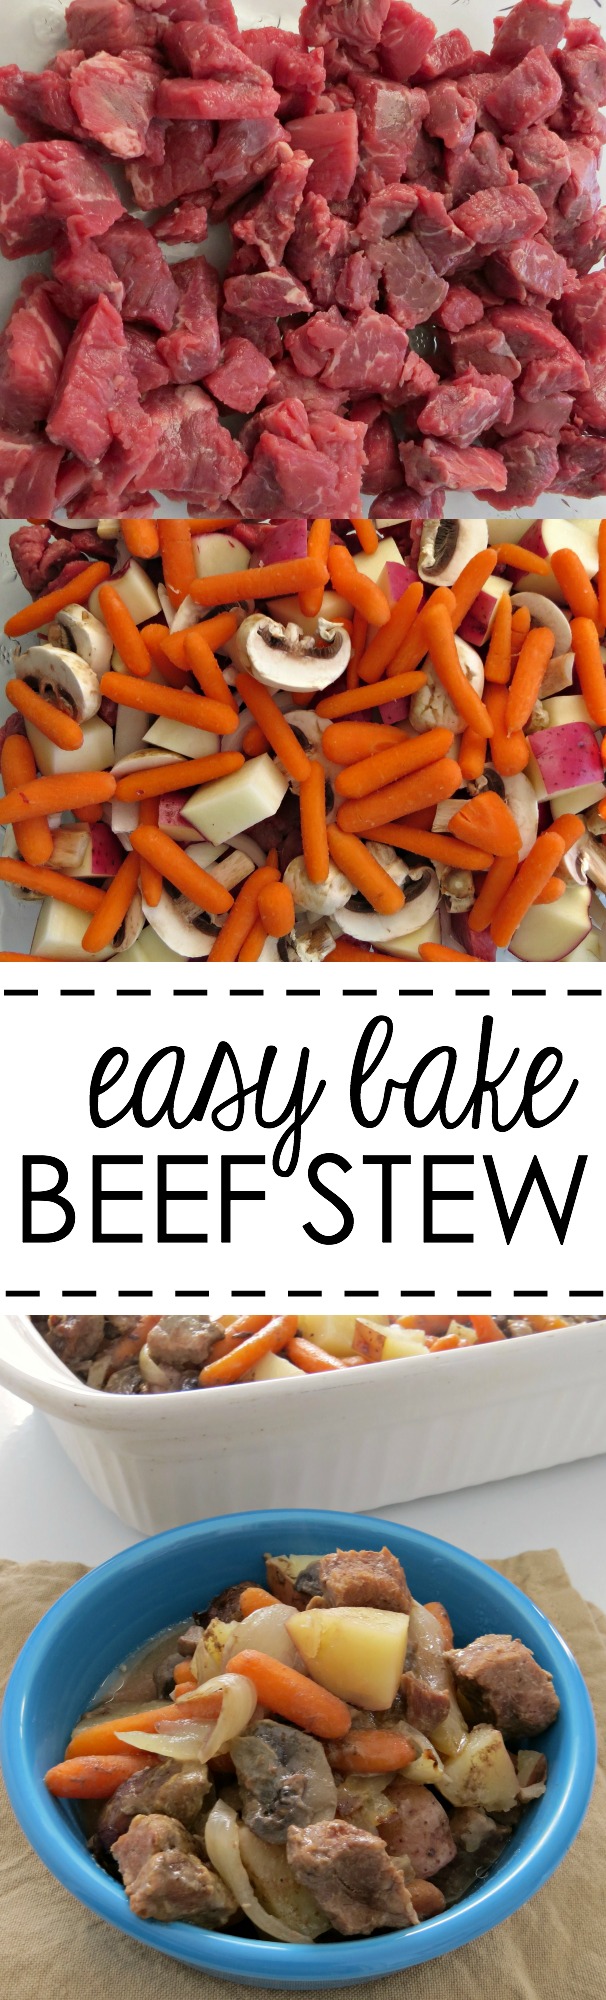 Easy Bake Beef Stew Recipe